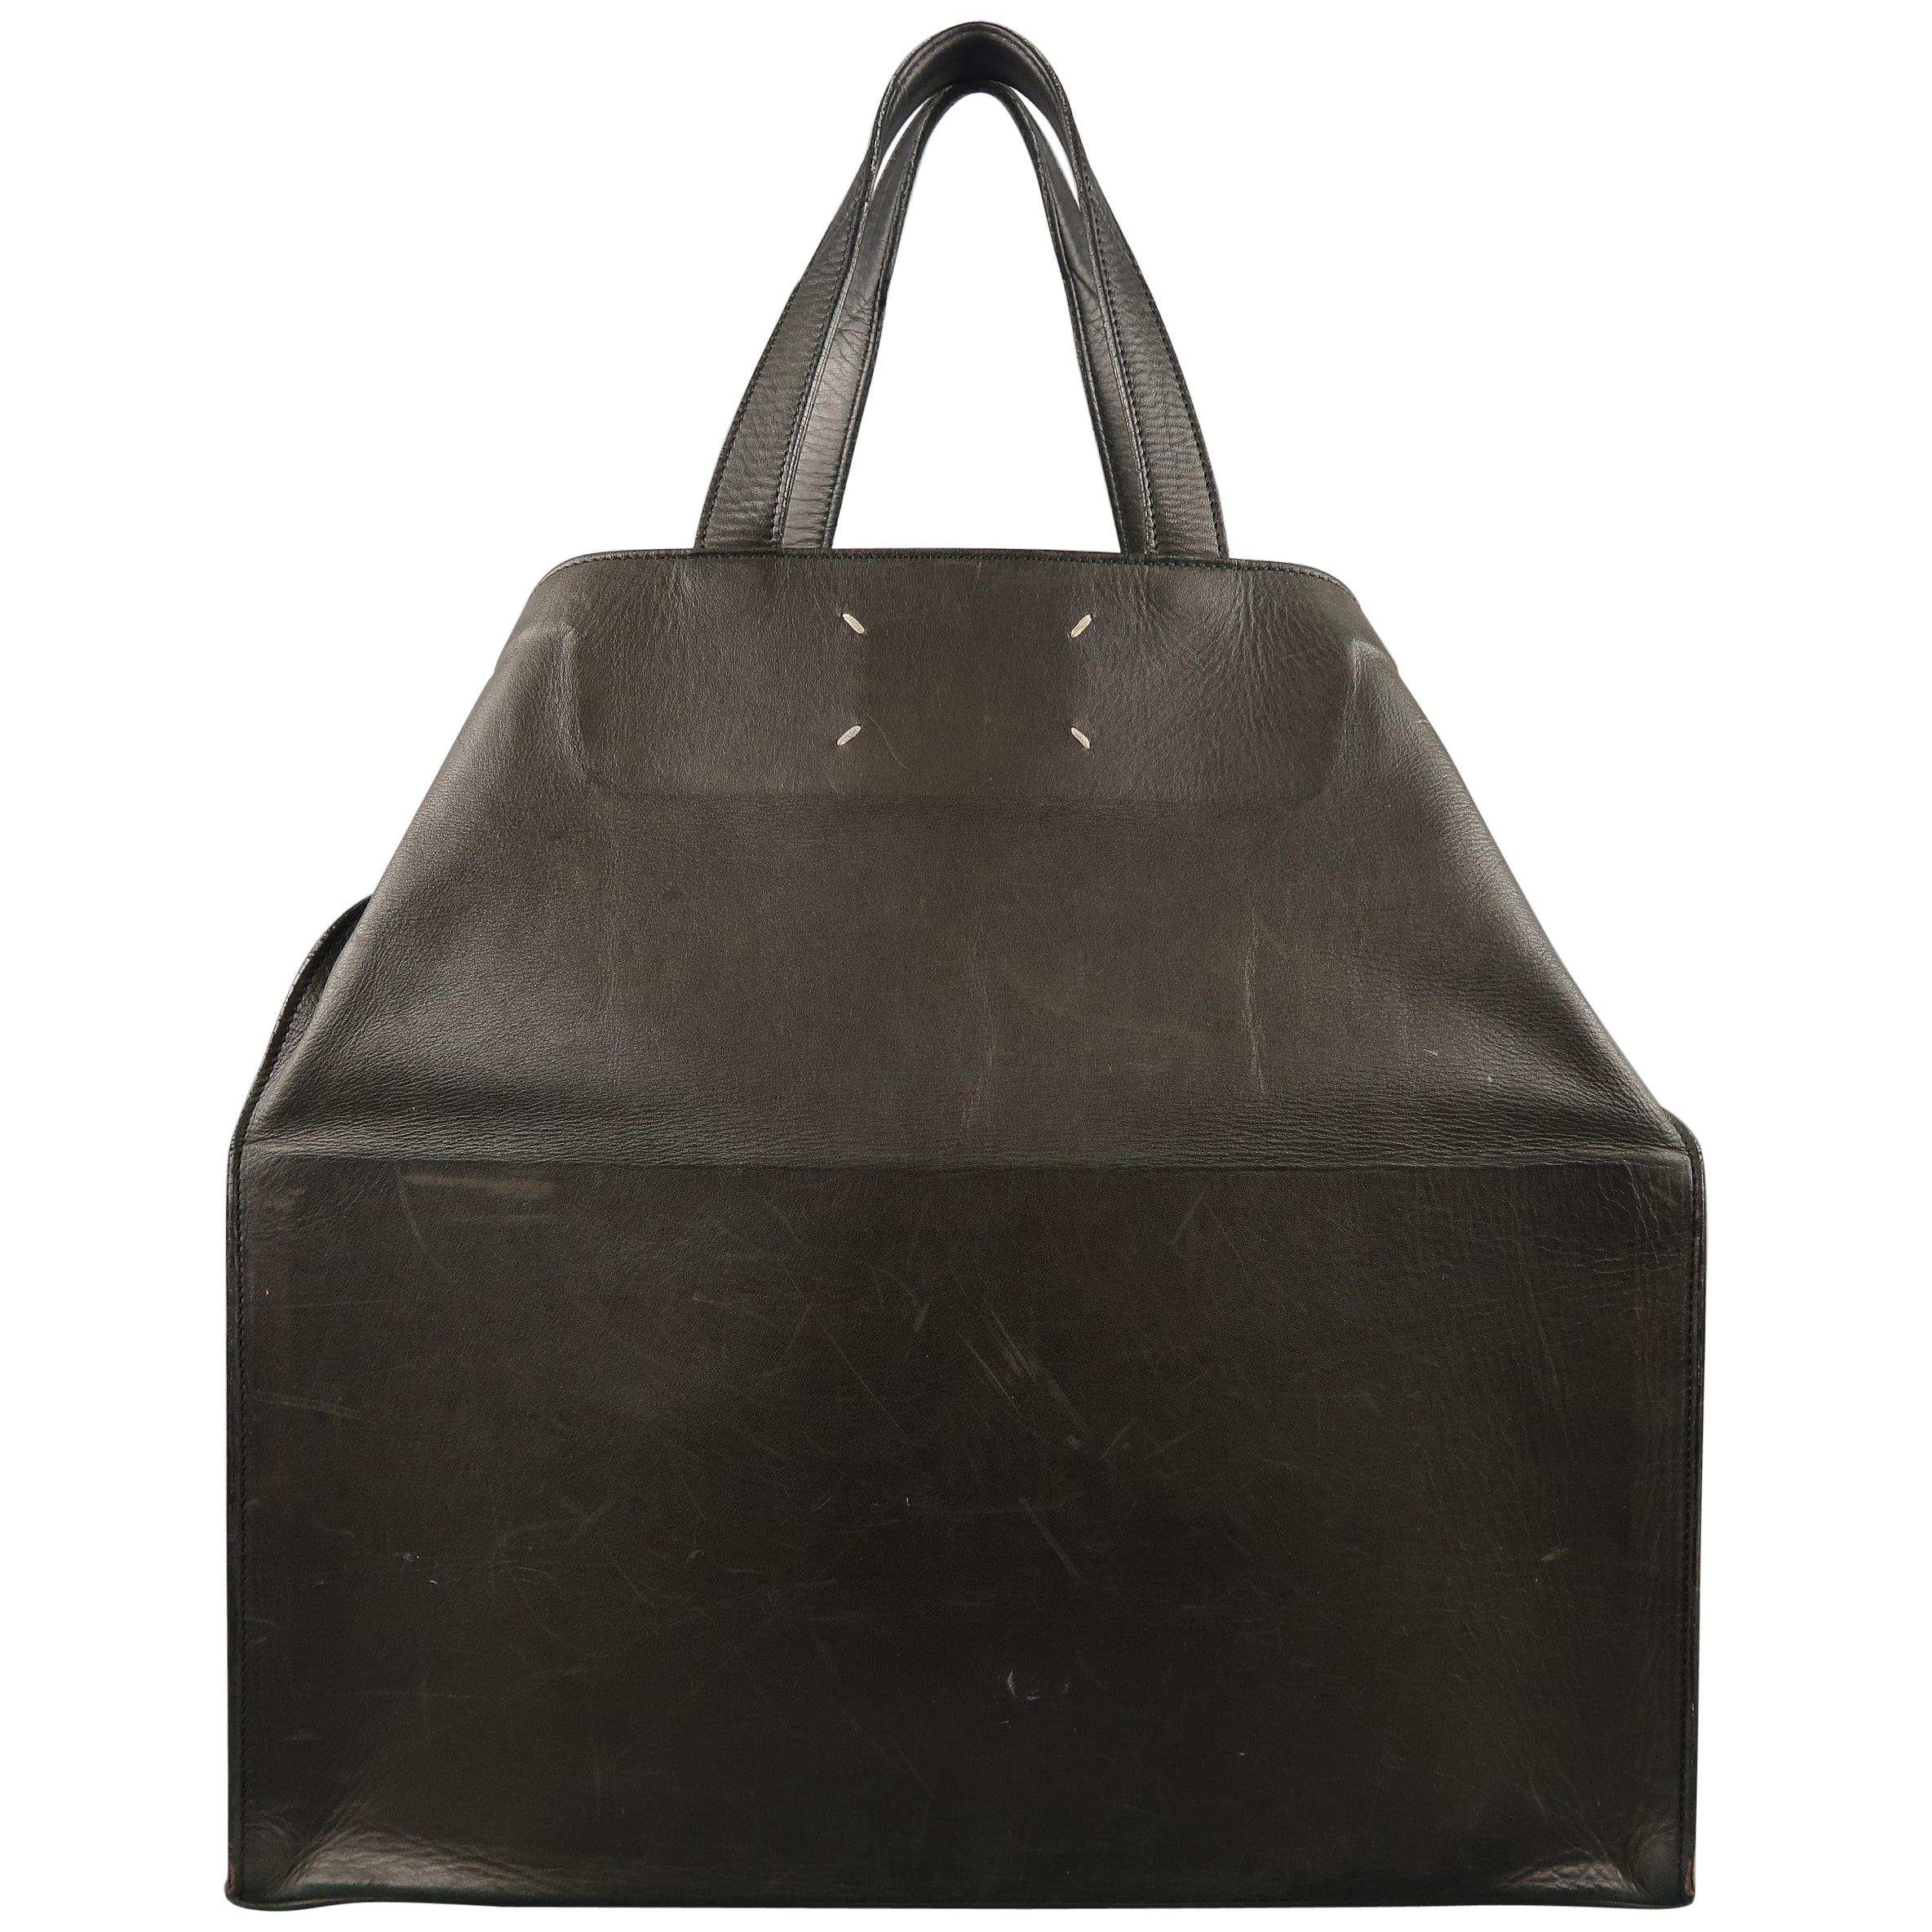 MAISON MARTIN MARGIELA Black Leather Icons Shopper / Clutch Tote Bag